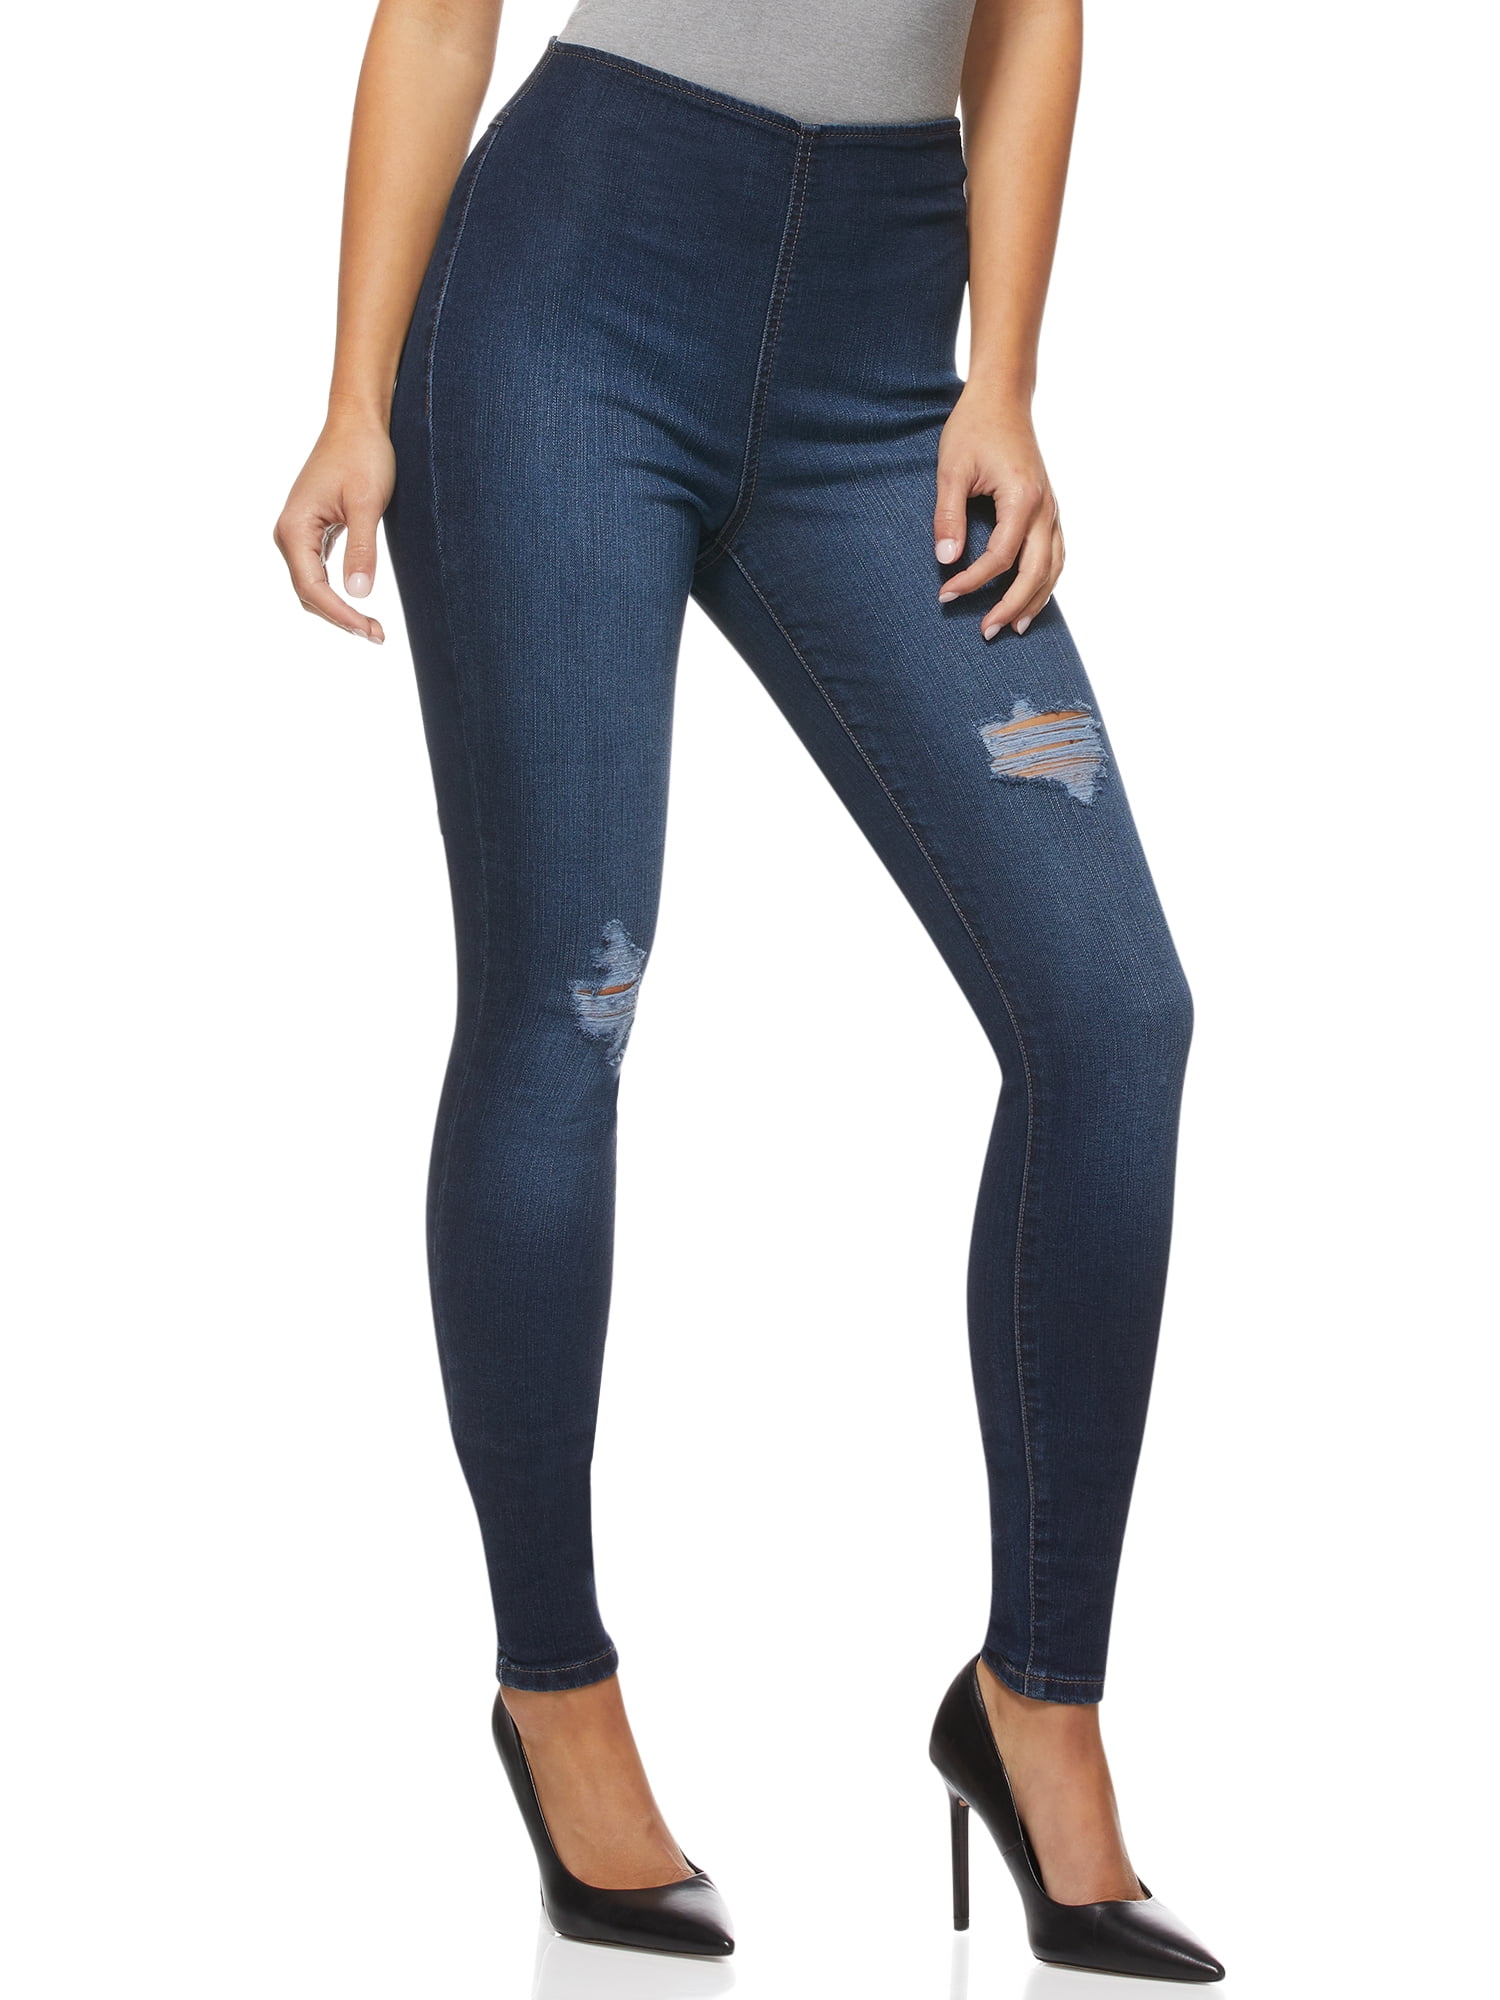 Sofia Jeans Women's Rosa Curvy High Rise Ankle Jeggings - Walmart.com